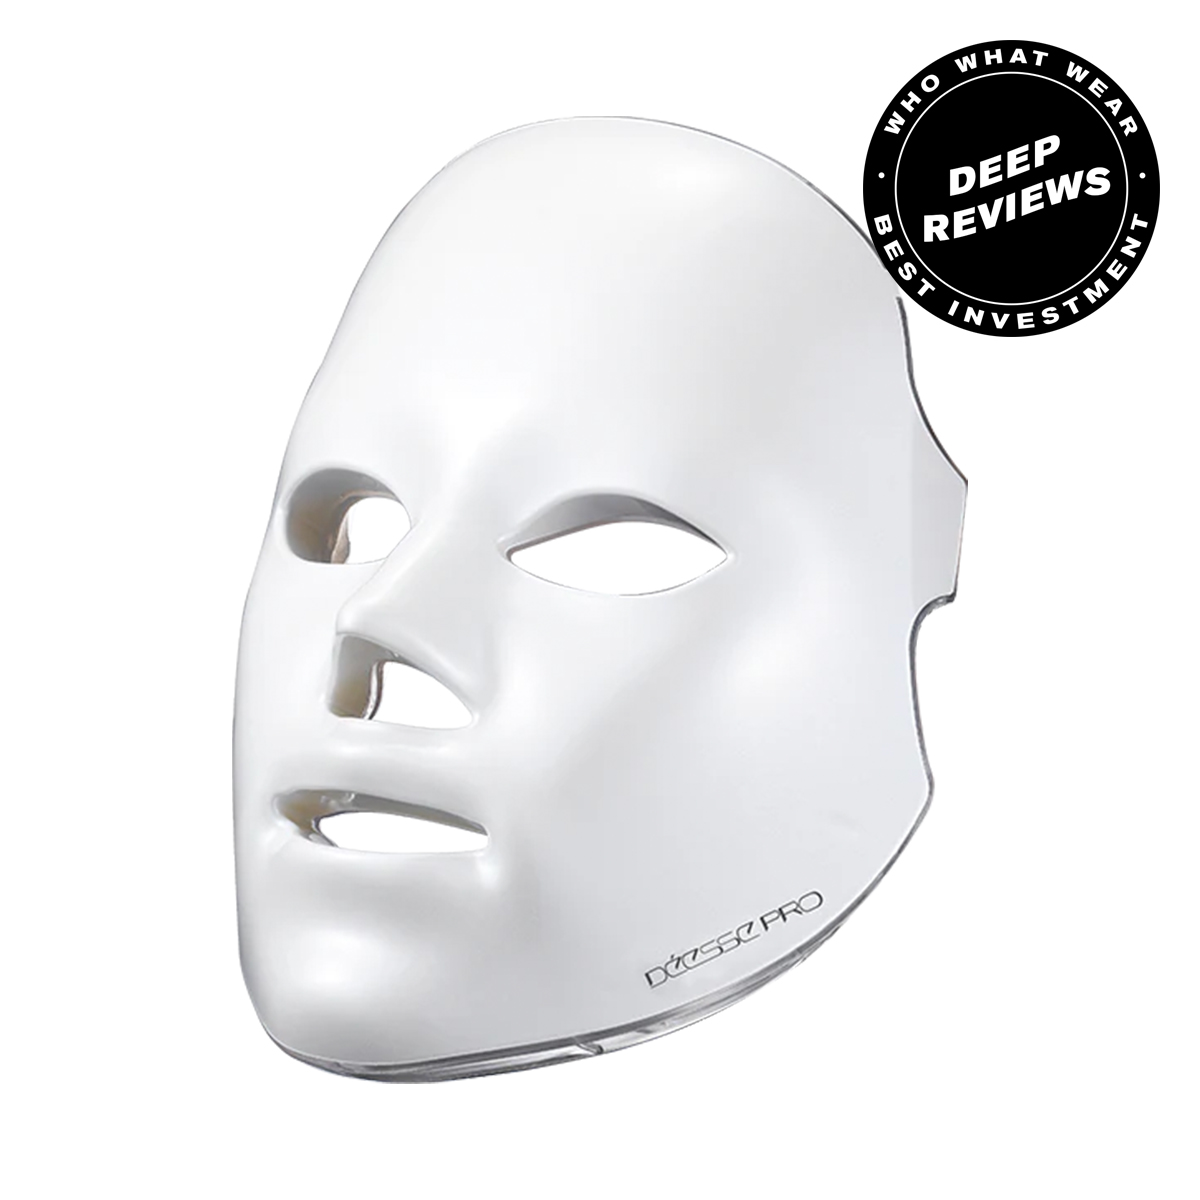 Déesse Pro LED Mask